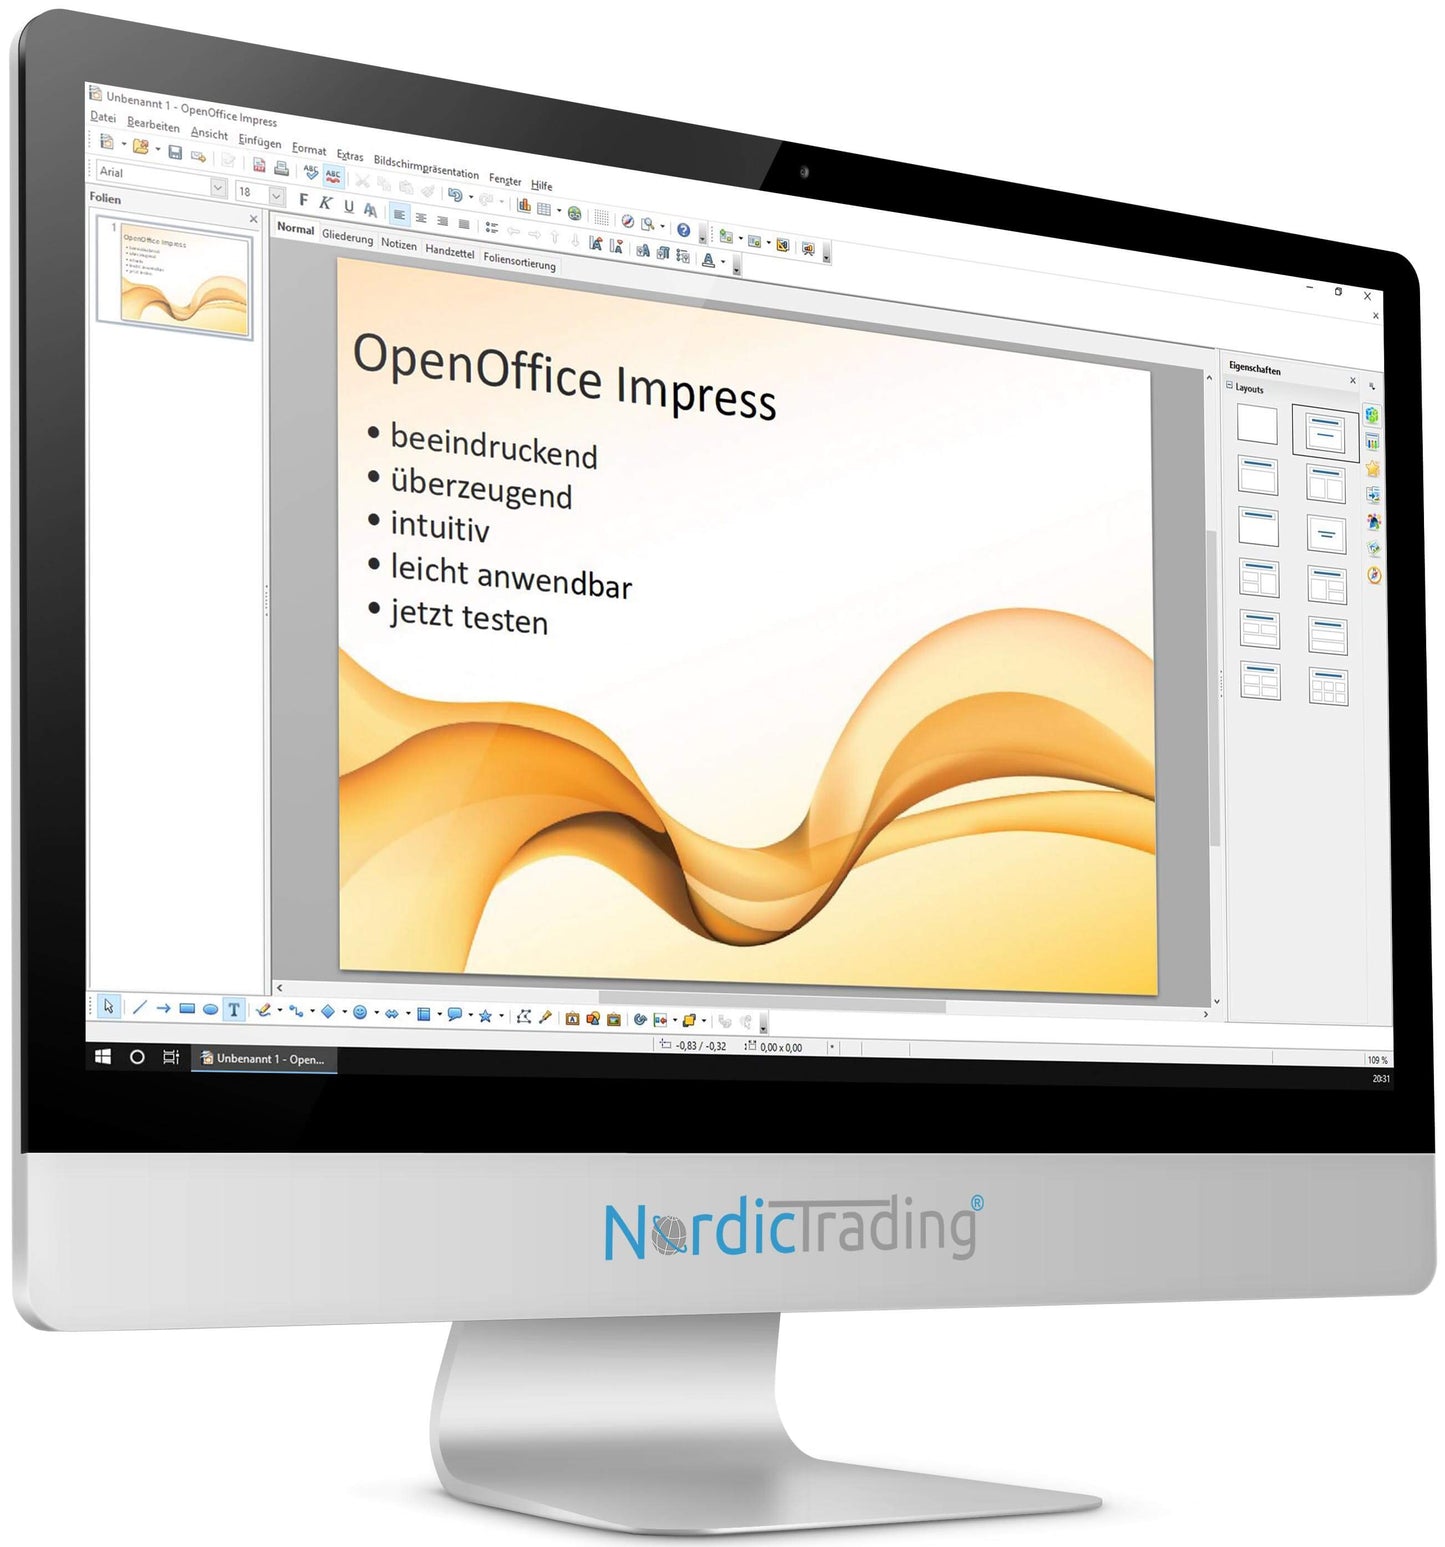 OpenOffice 2024 Premium Edition (V. 4.1.15) auf 8 GB USB-Stick